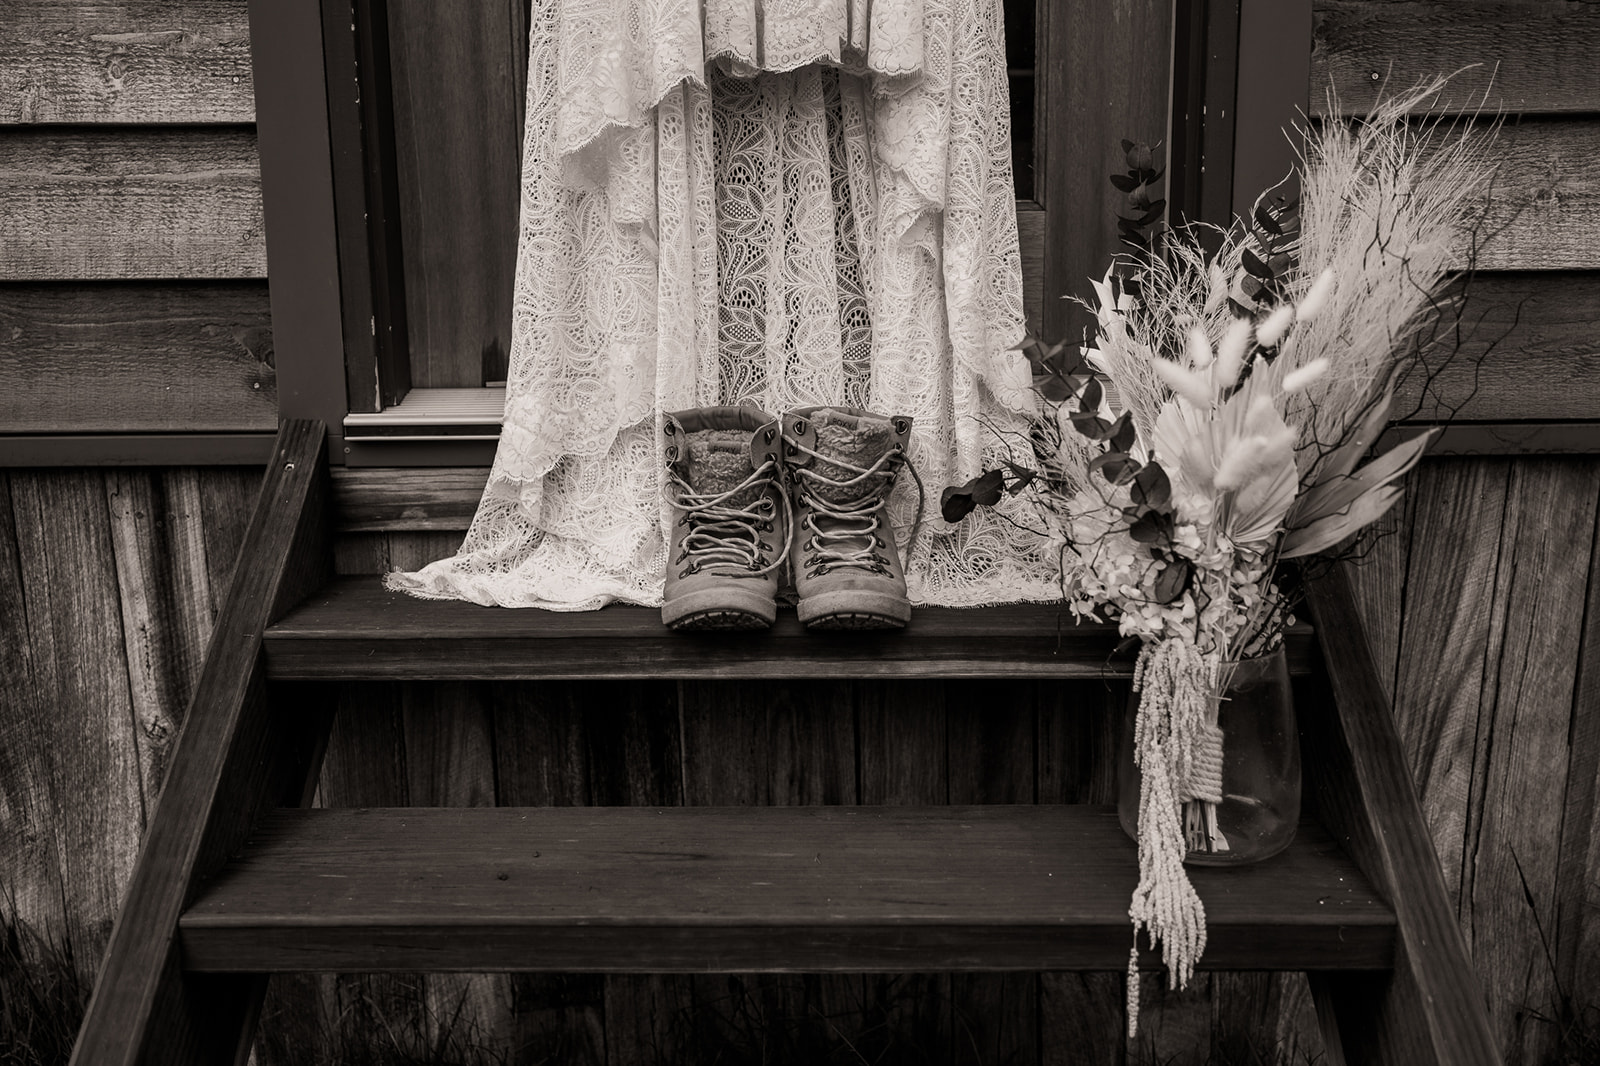 the wild pair elopment photography + florals + karen willis bride wedding dress